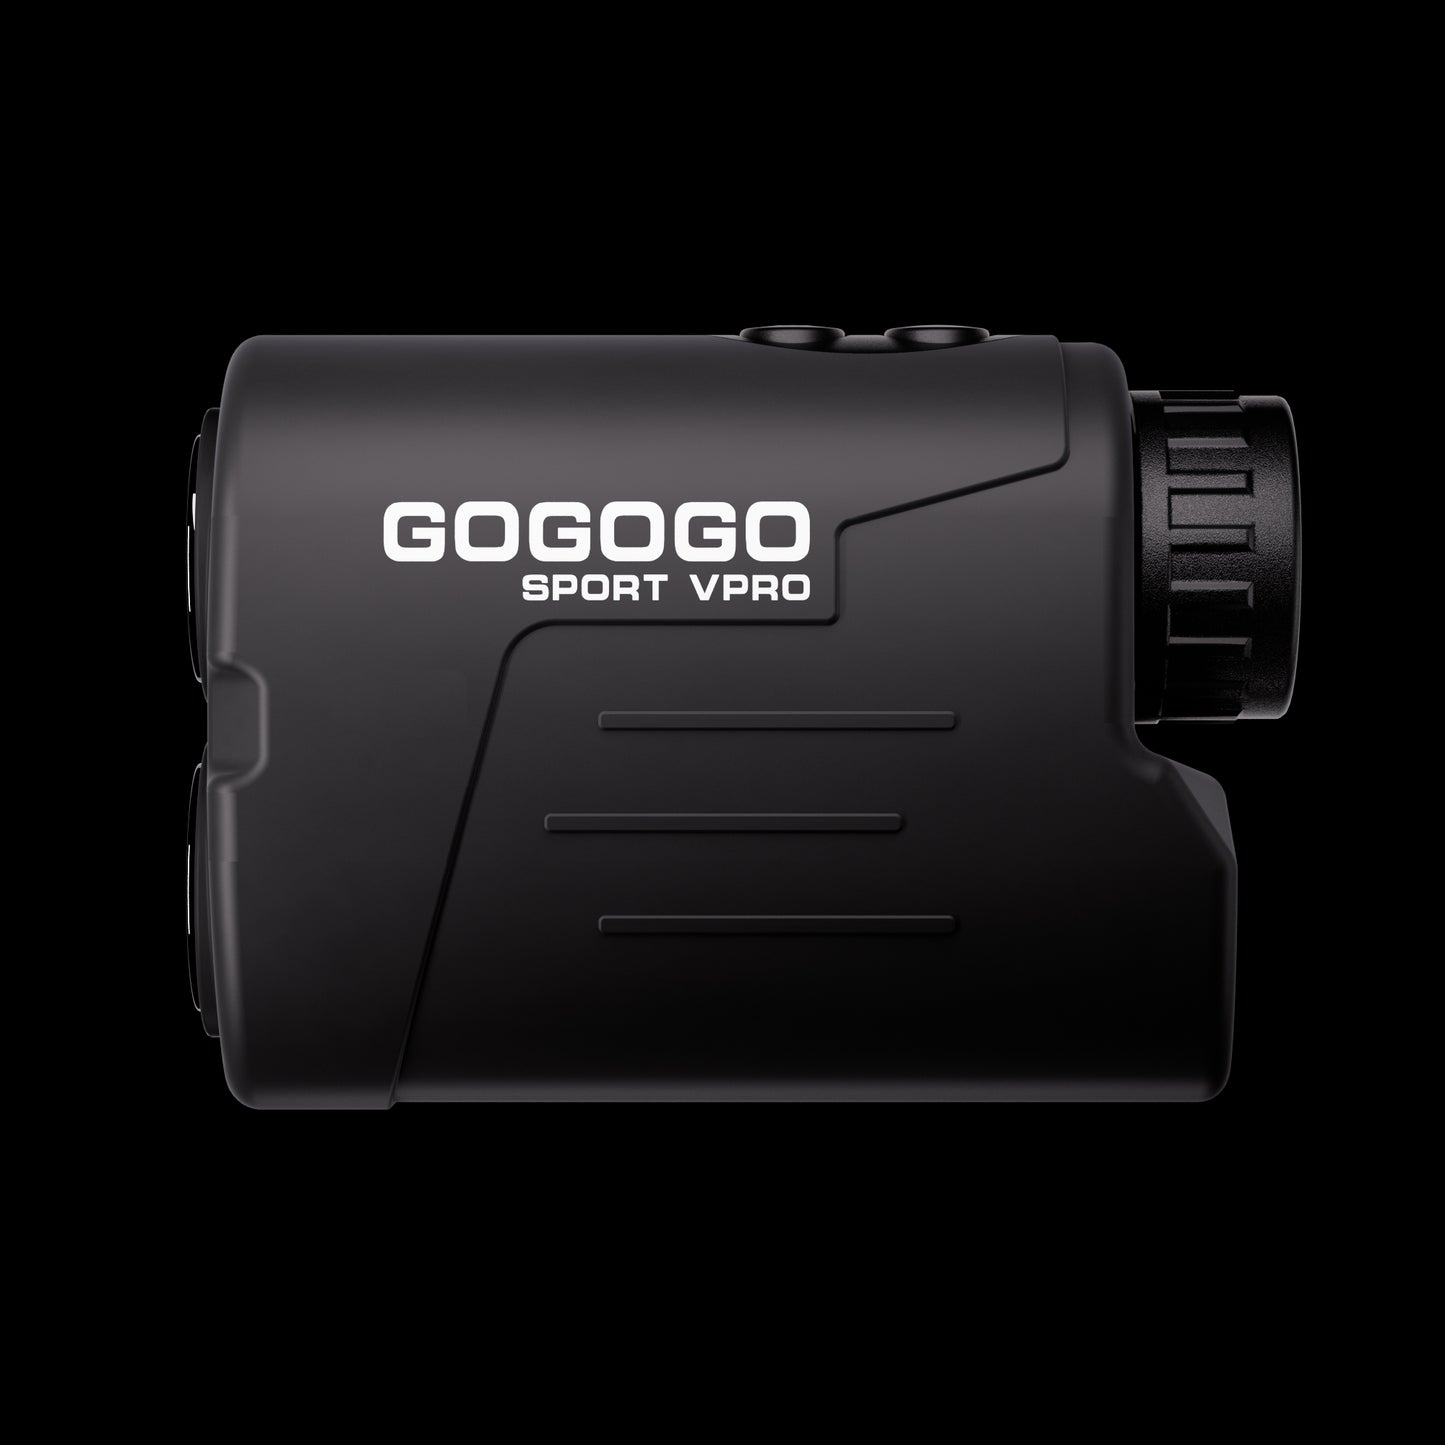 Golf Rangefinder|Laser Hunting Rangefinder|Gogogo GS03/GS07 Black 650/900Y